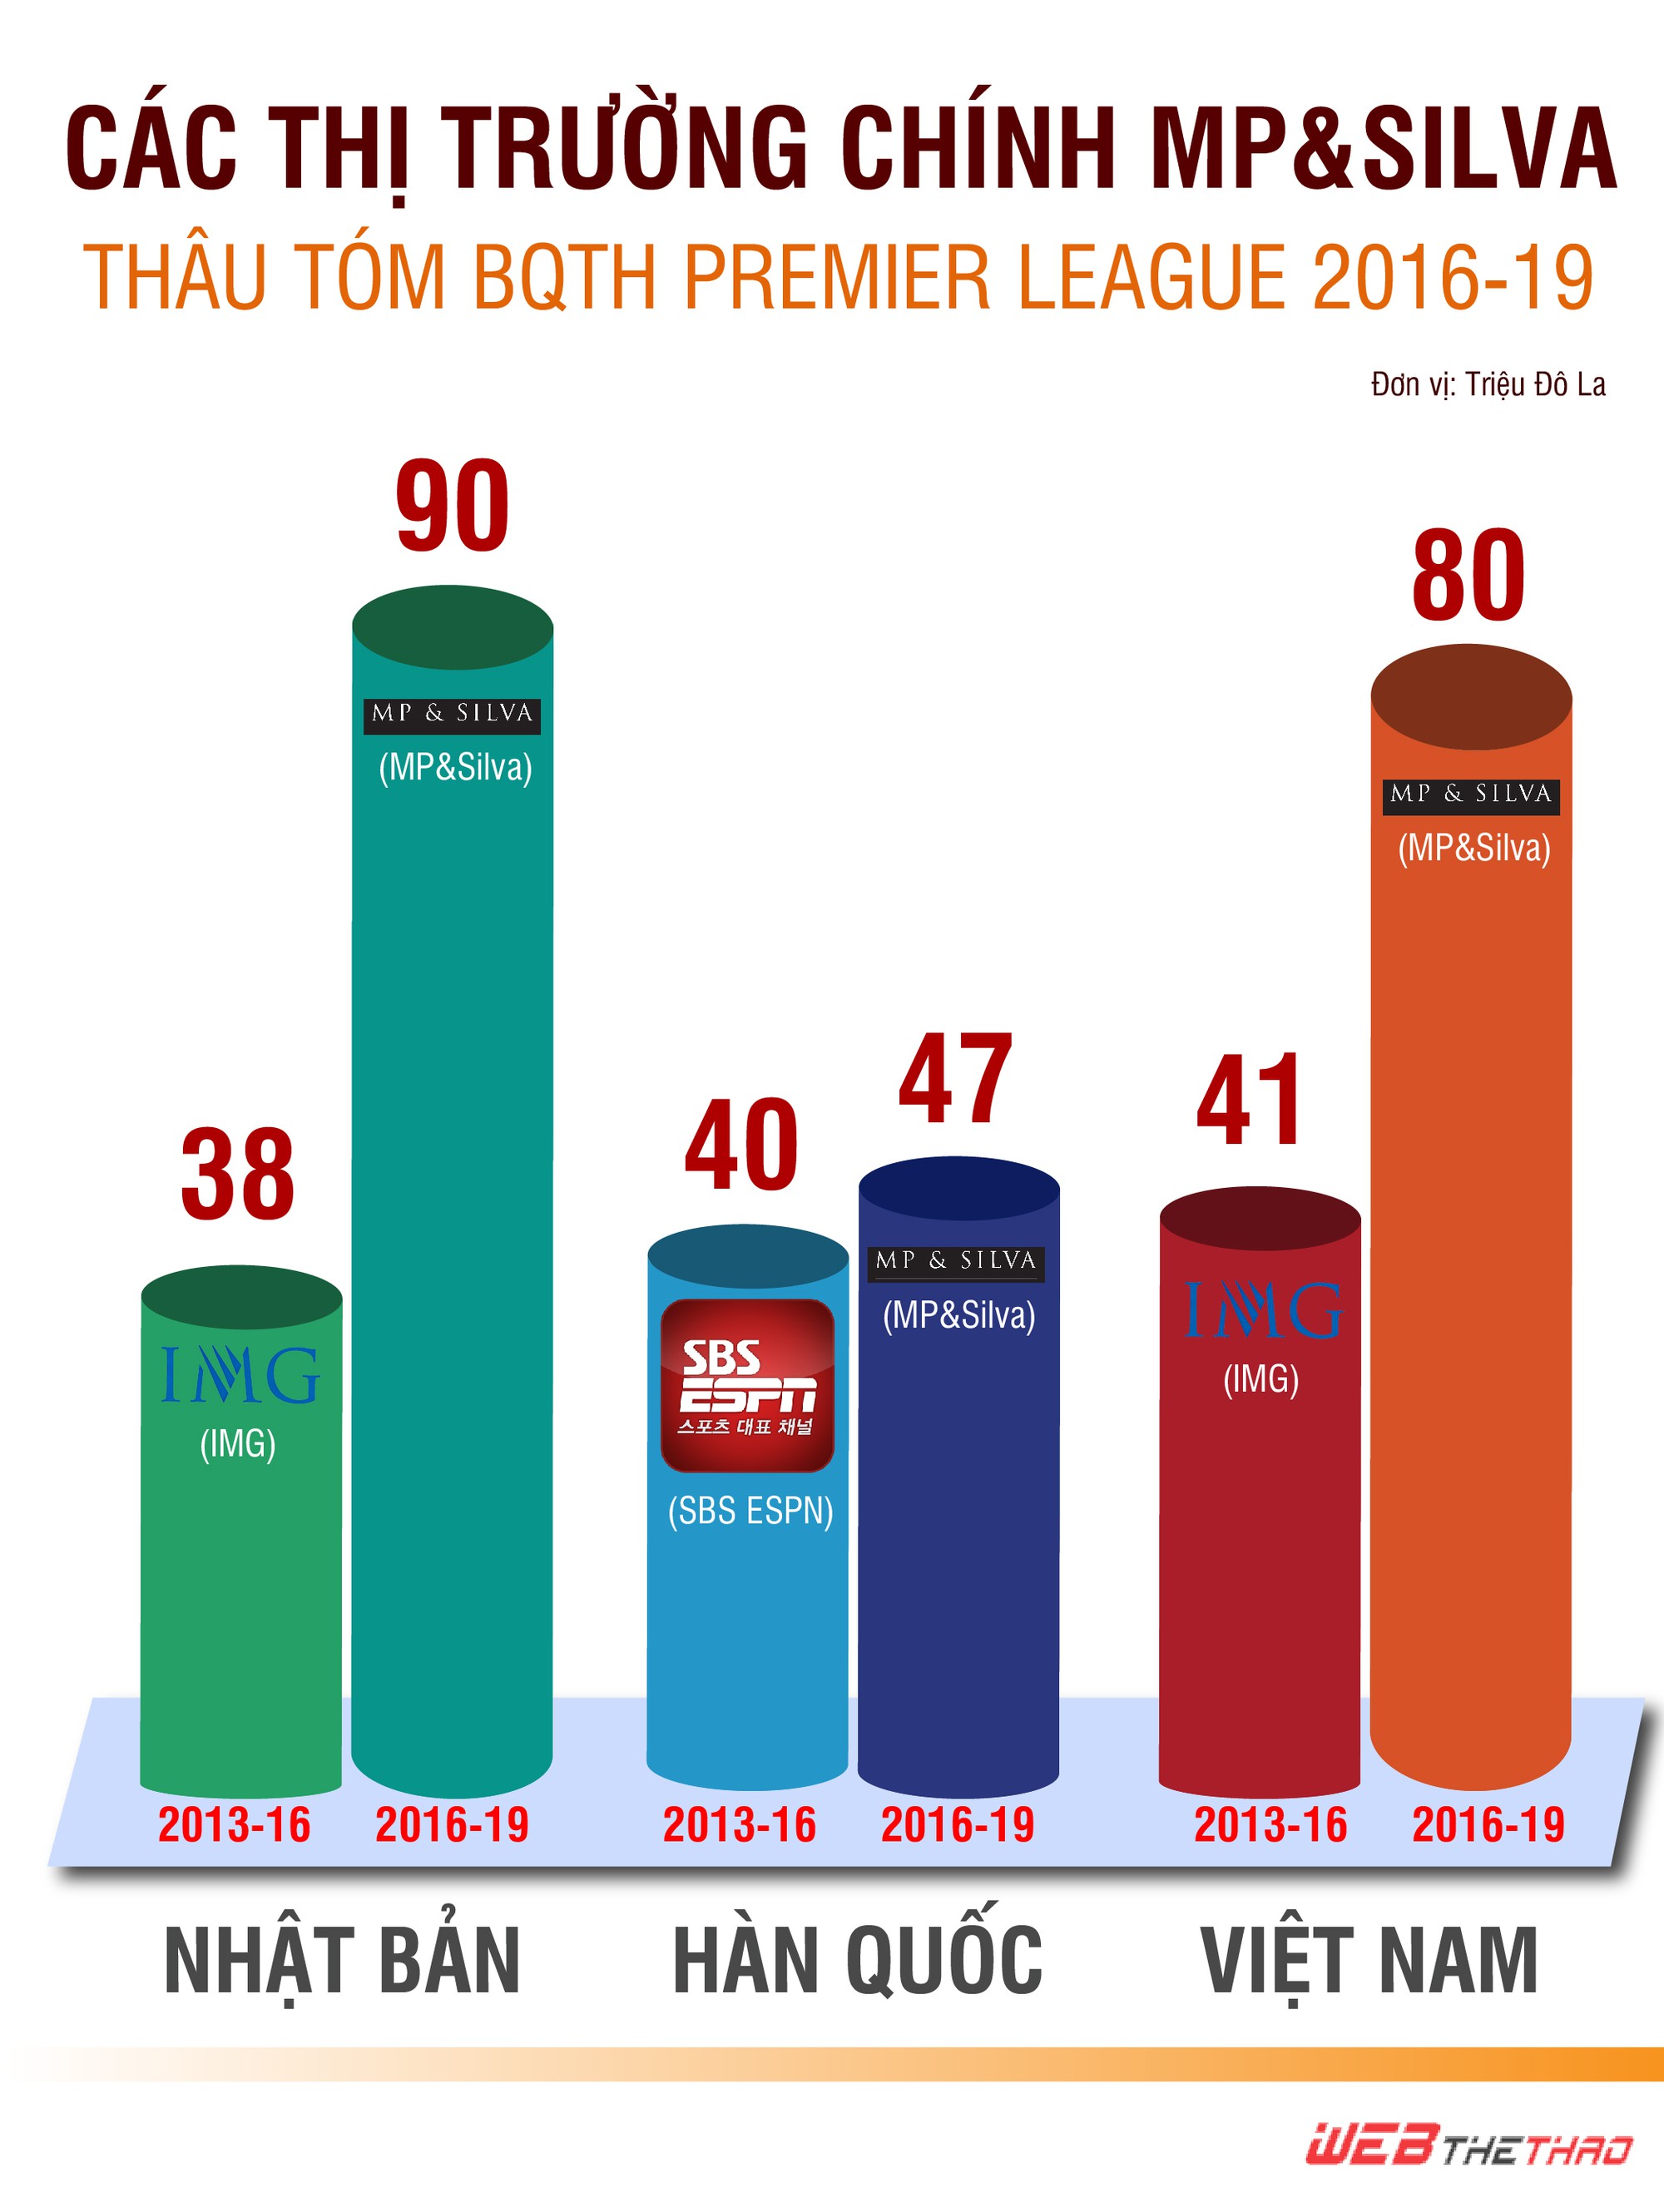 BQTH Premier League - K+ có mua với giá trên trời?